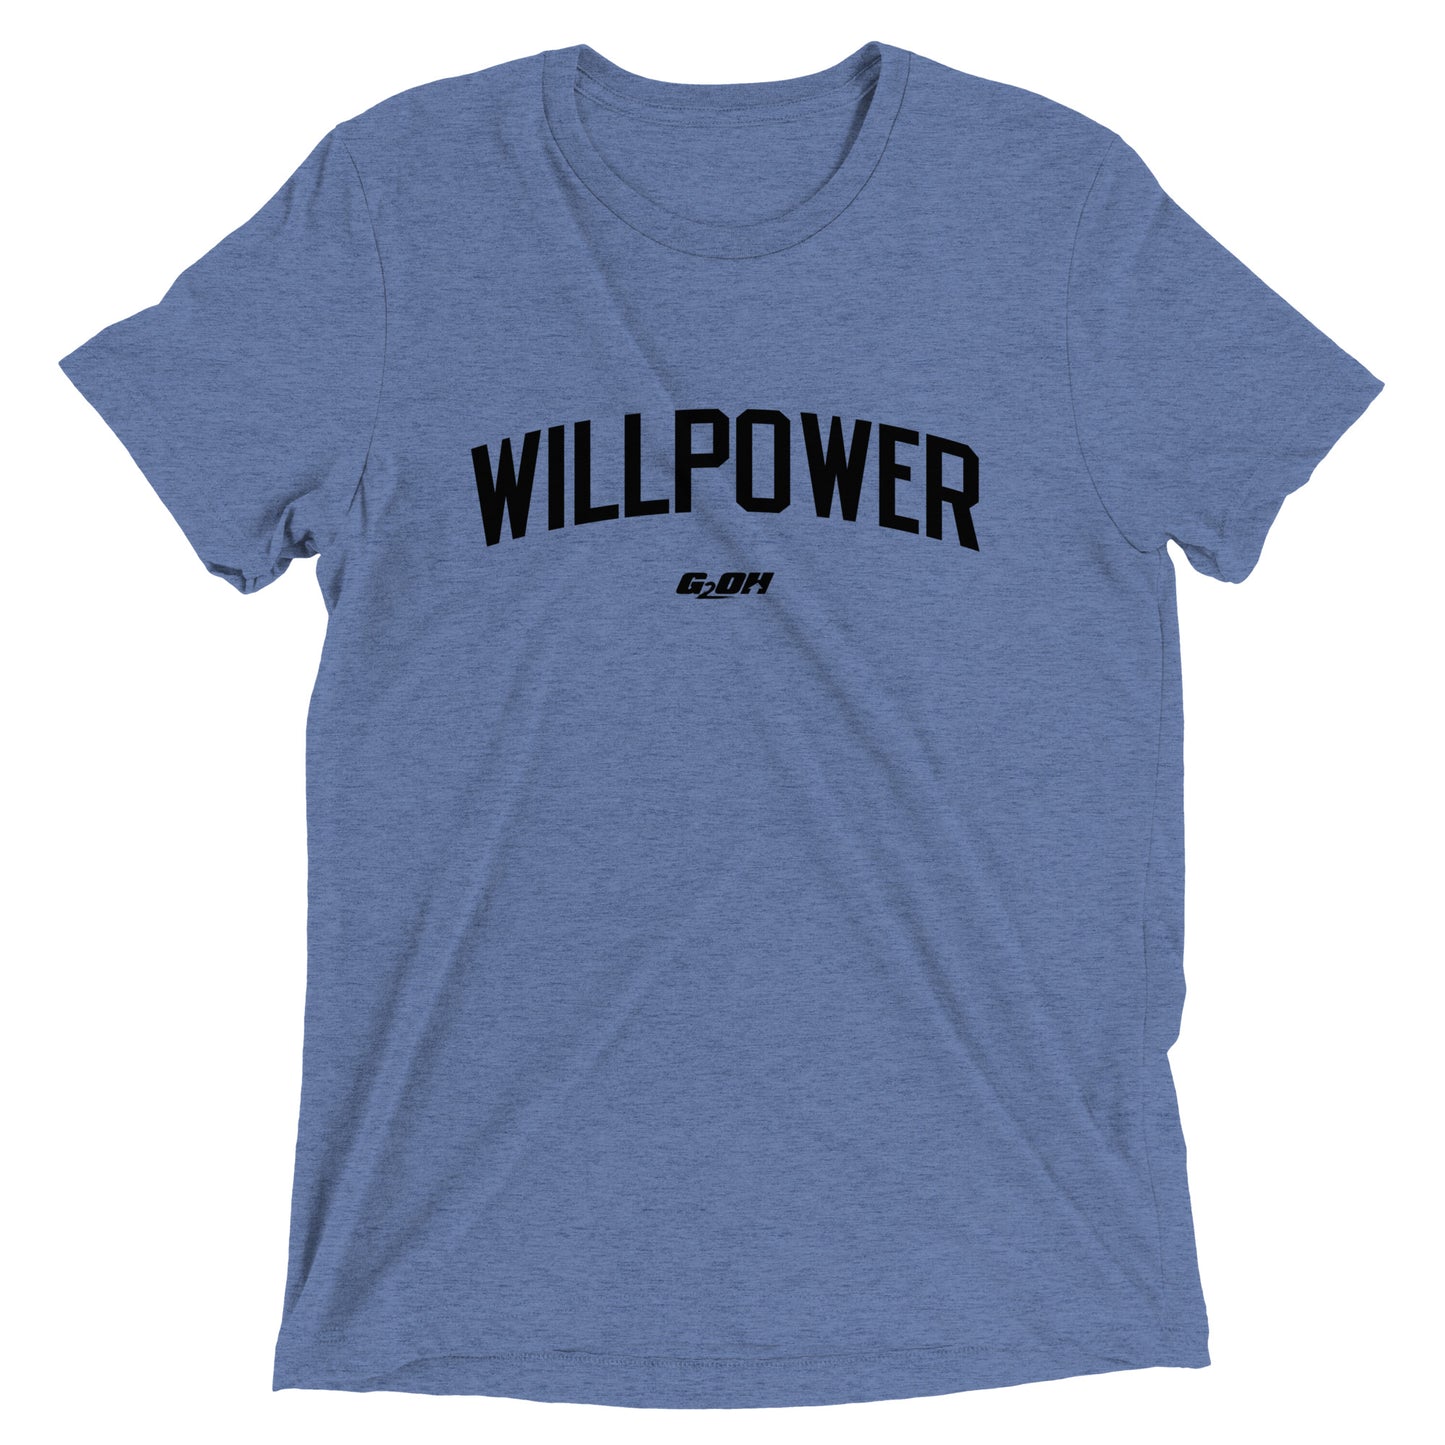 Willpower Men's T-Shirt